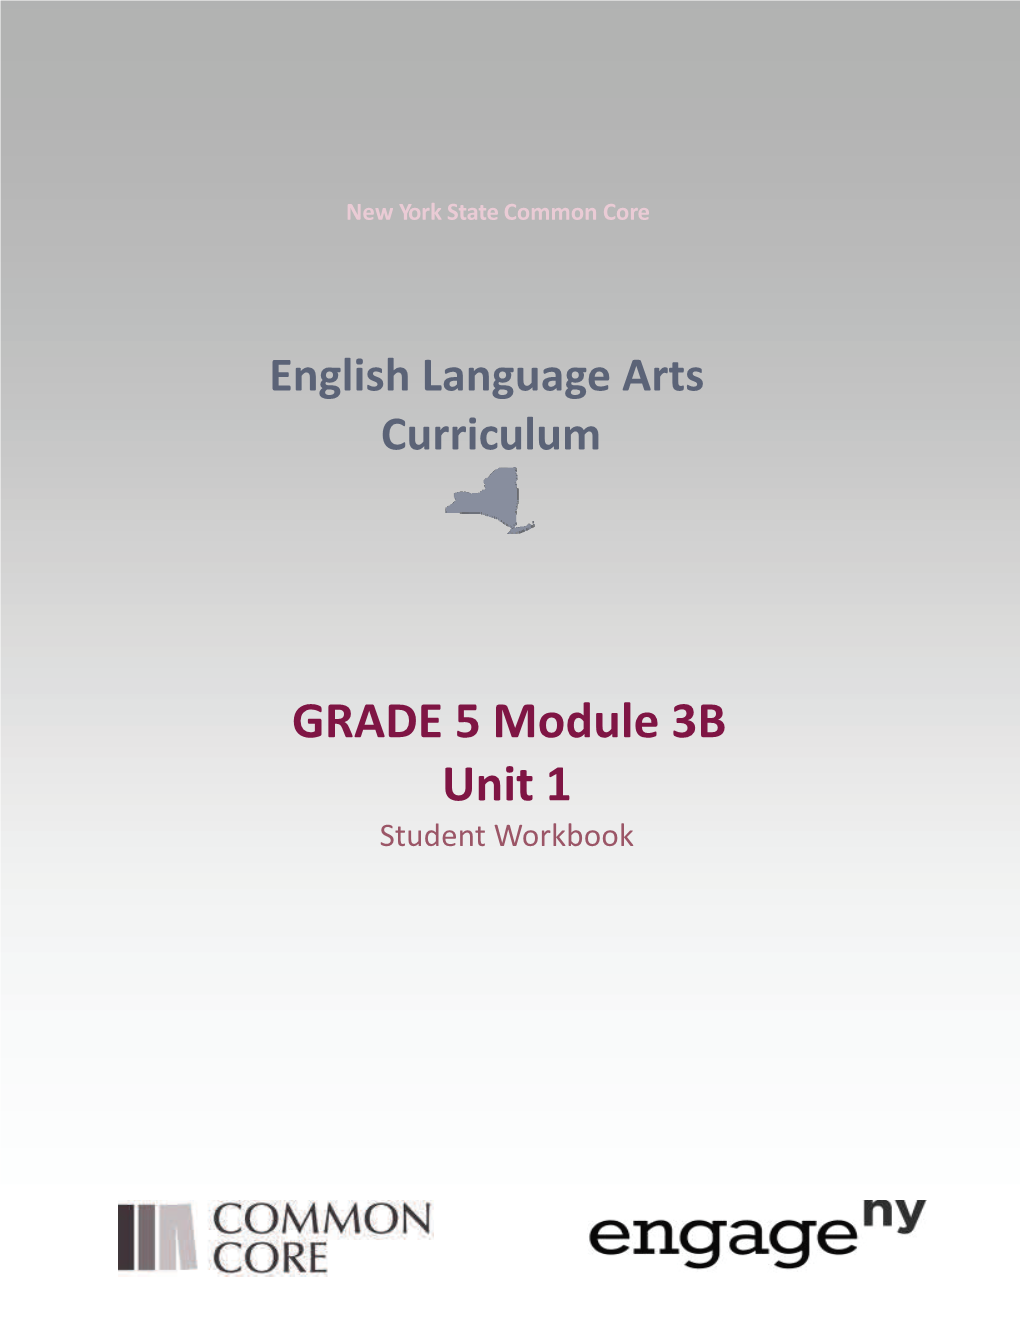 GRADE 5 Module 3B Unit 1 Student Workbook